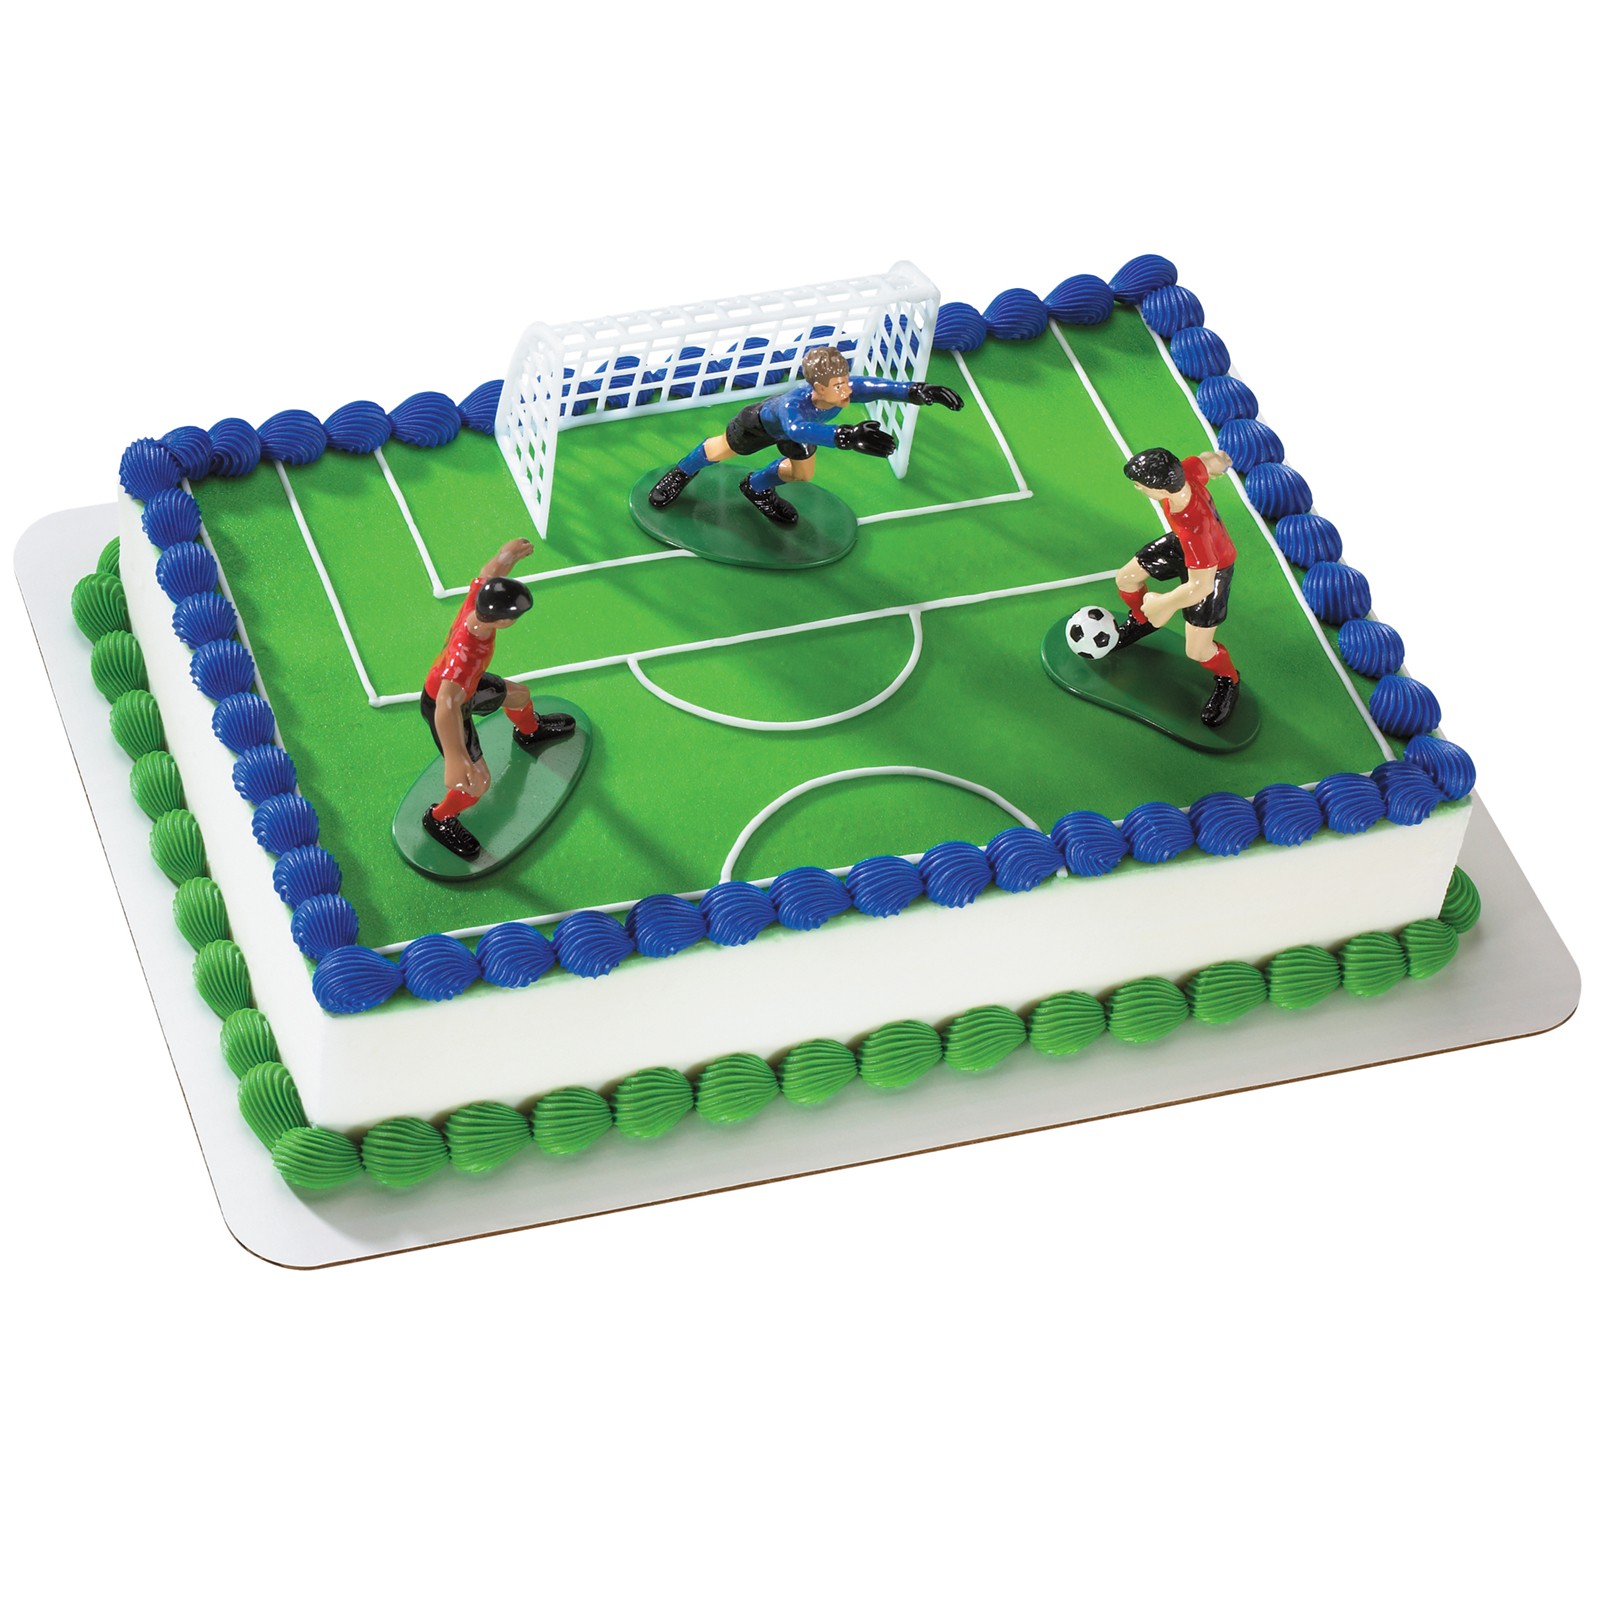 9 Photos of Football Birthday Cakes Publix.